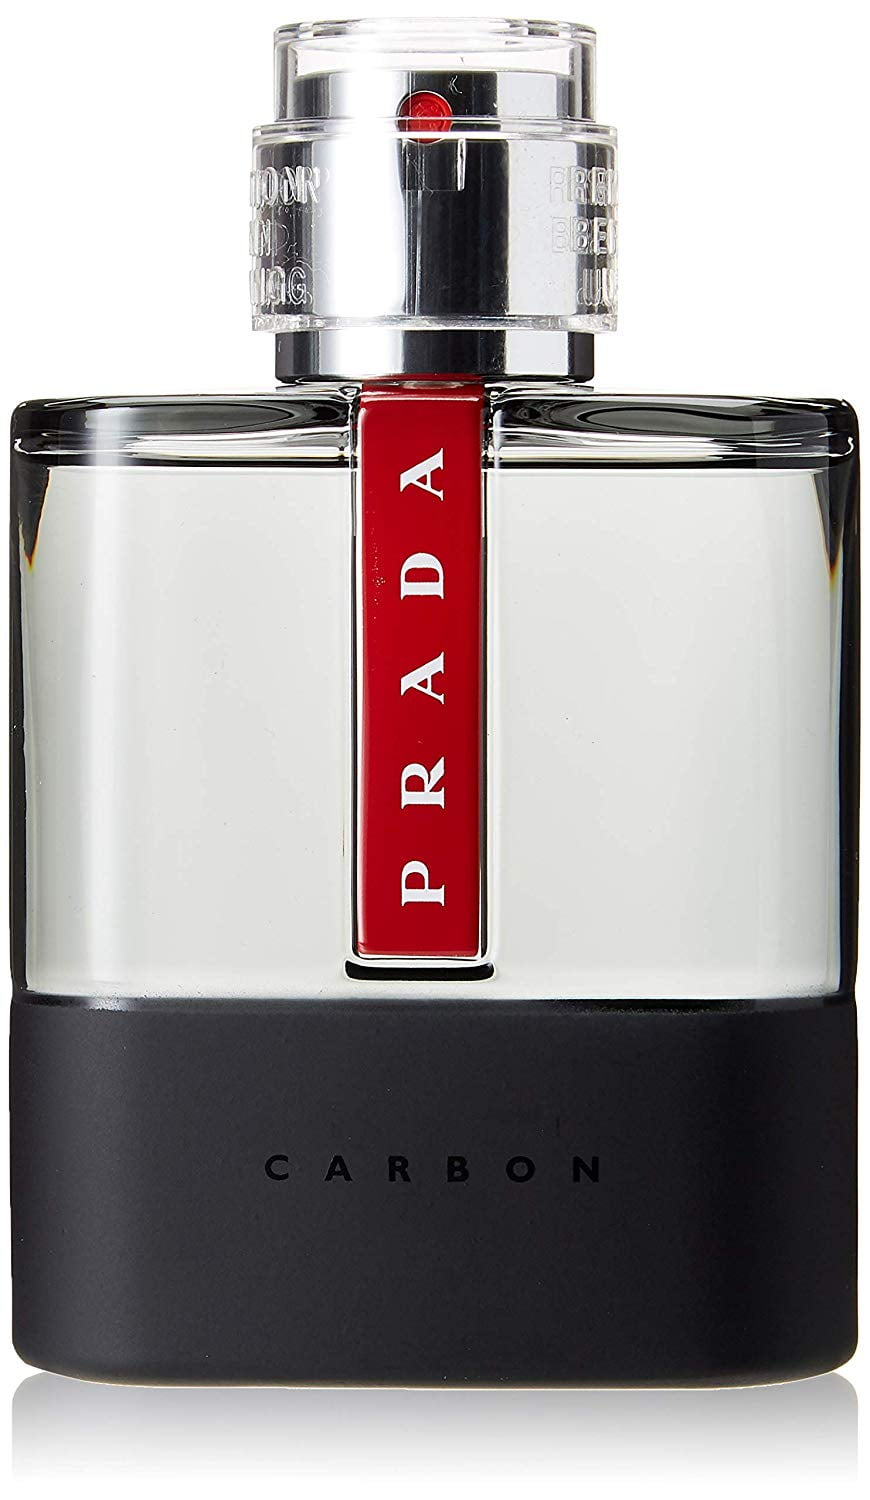 prada carbon 100ml price